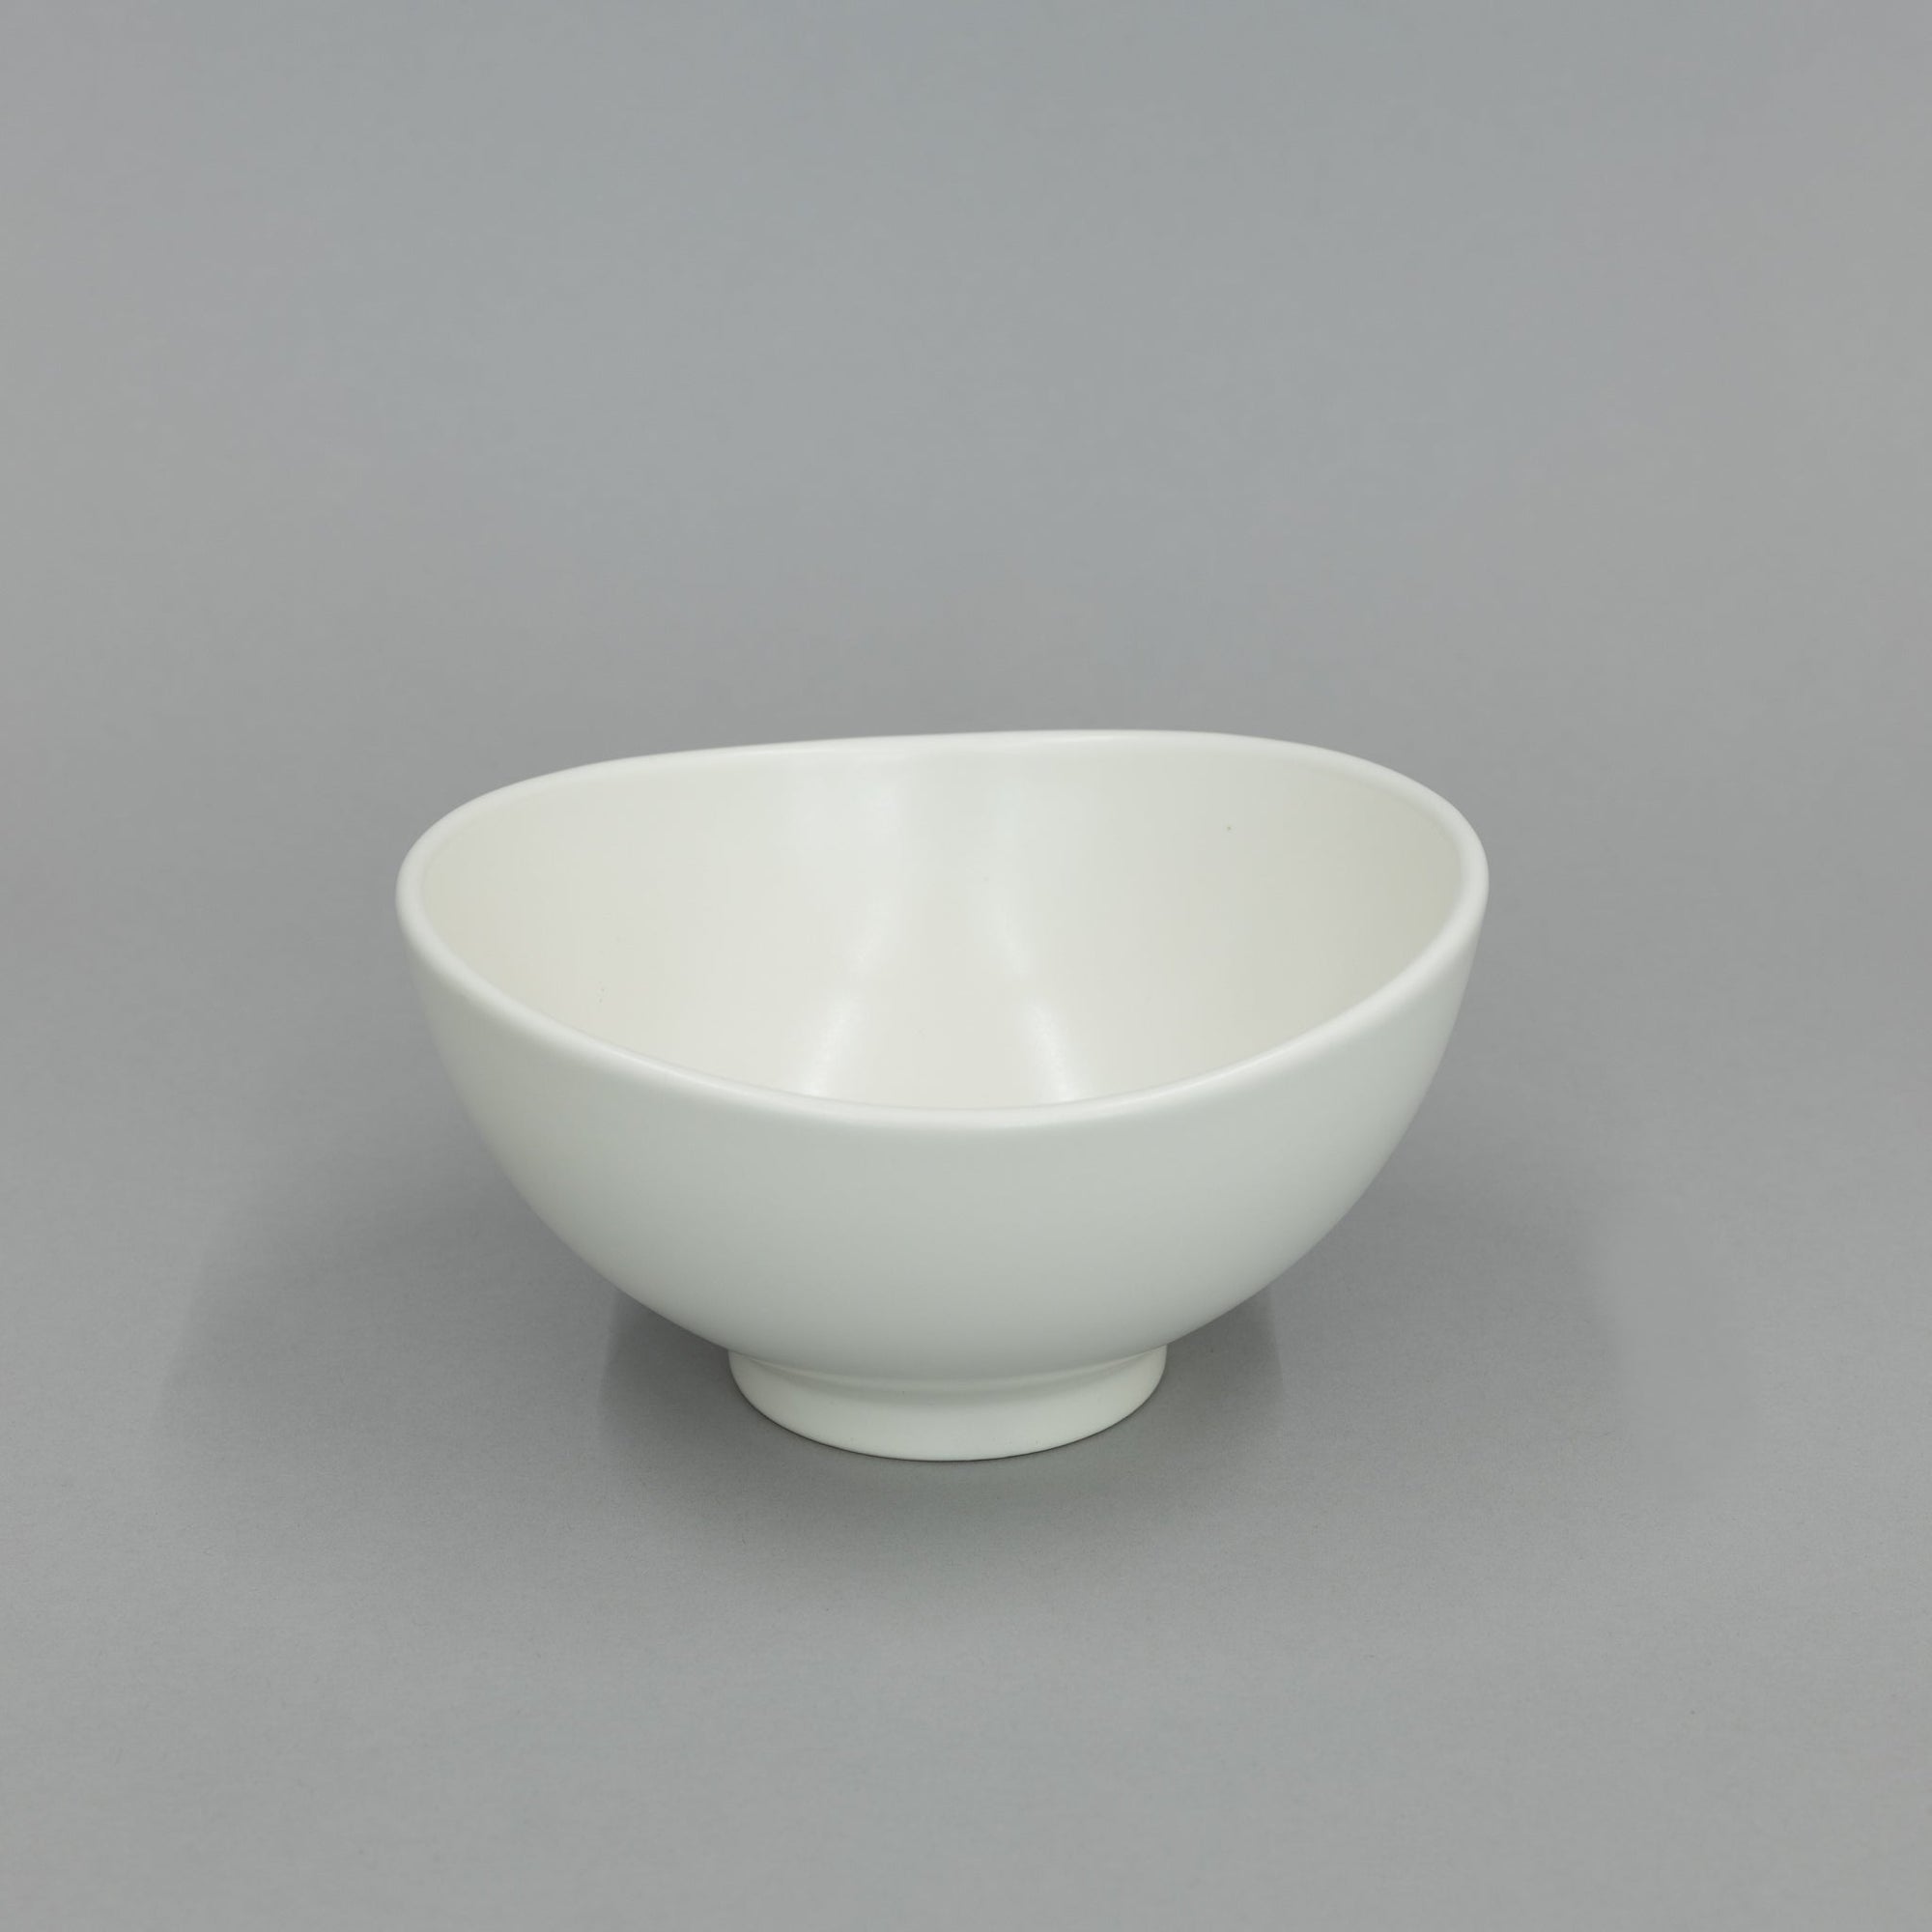 Ceramic Japan Infinity Bowls - White | Tortoise General Store